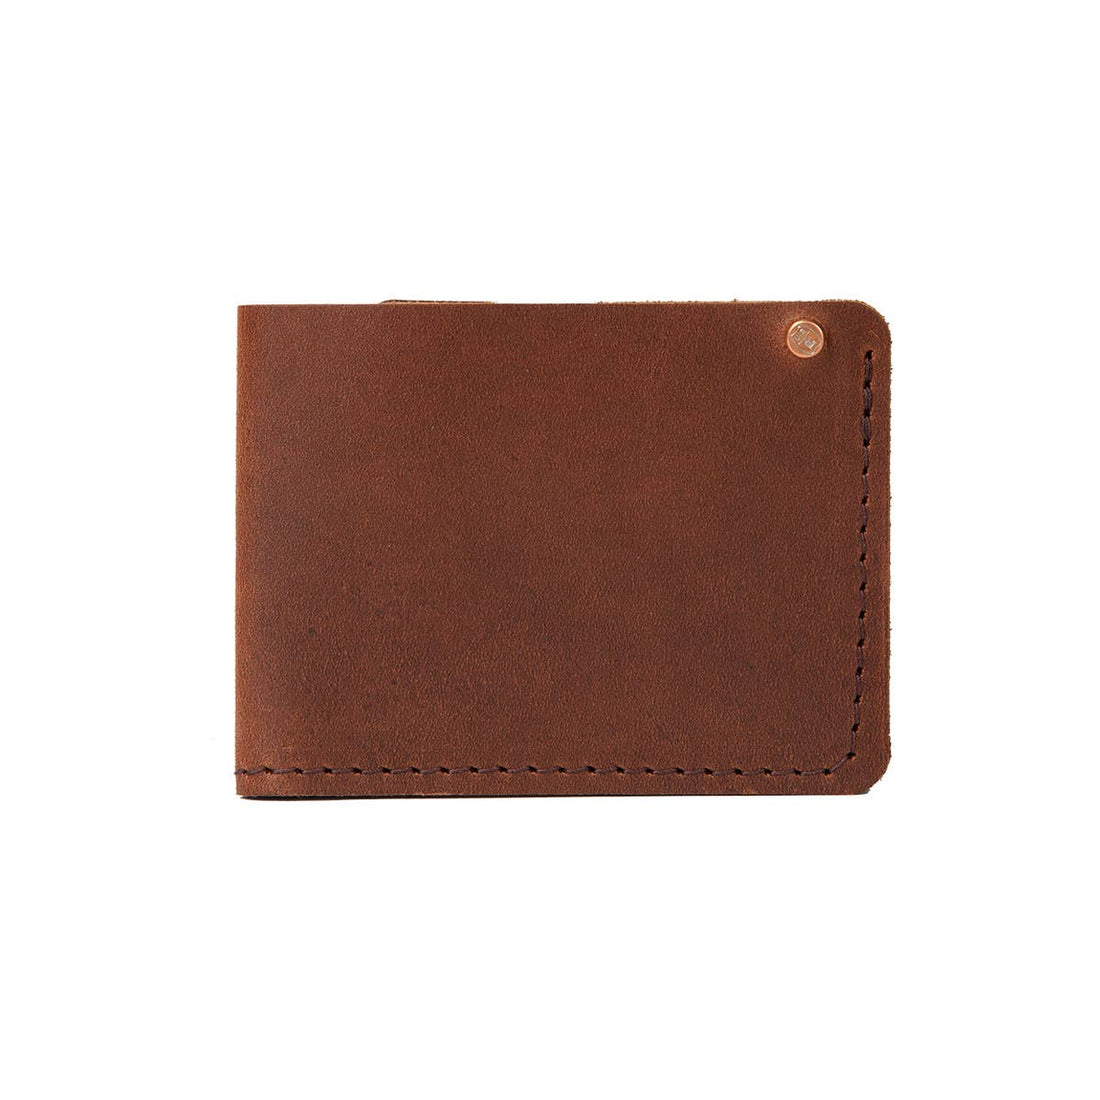 Horizon Leather Wallet | Saddle Brown